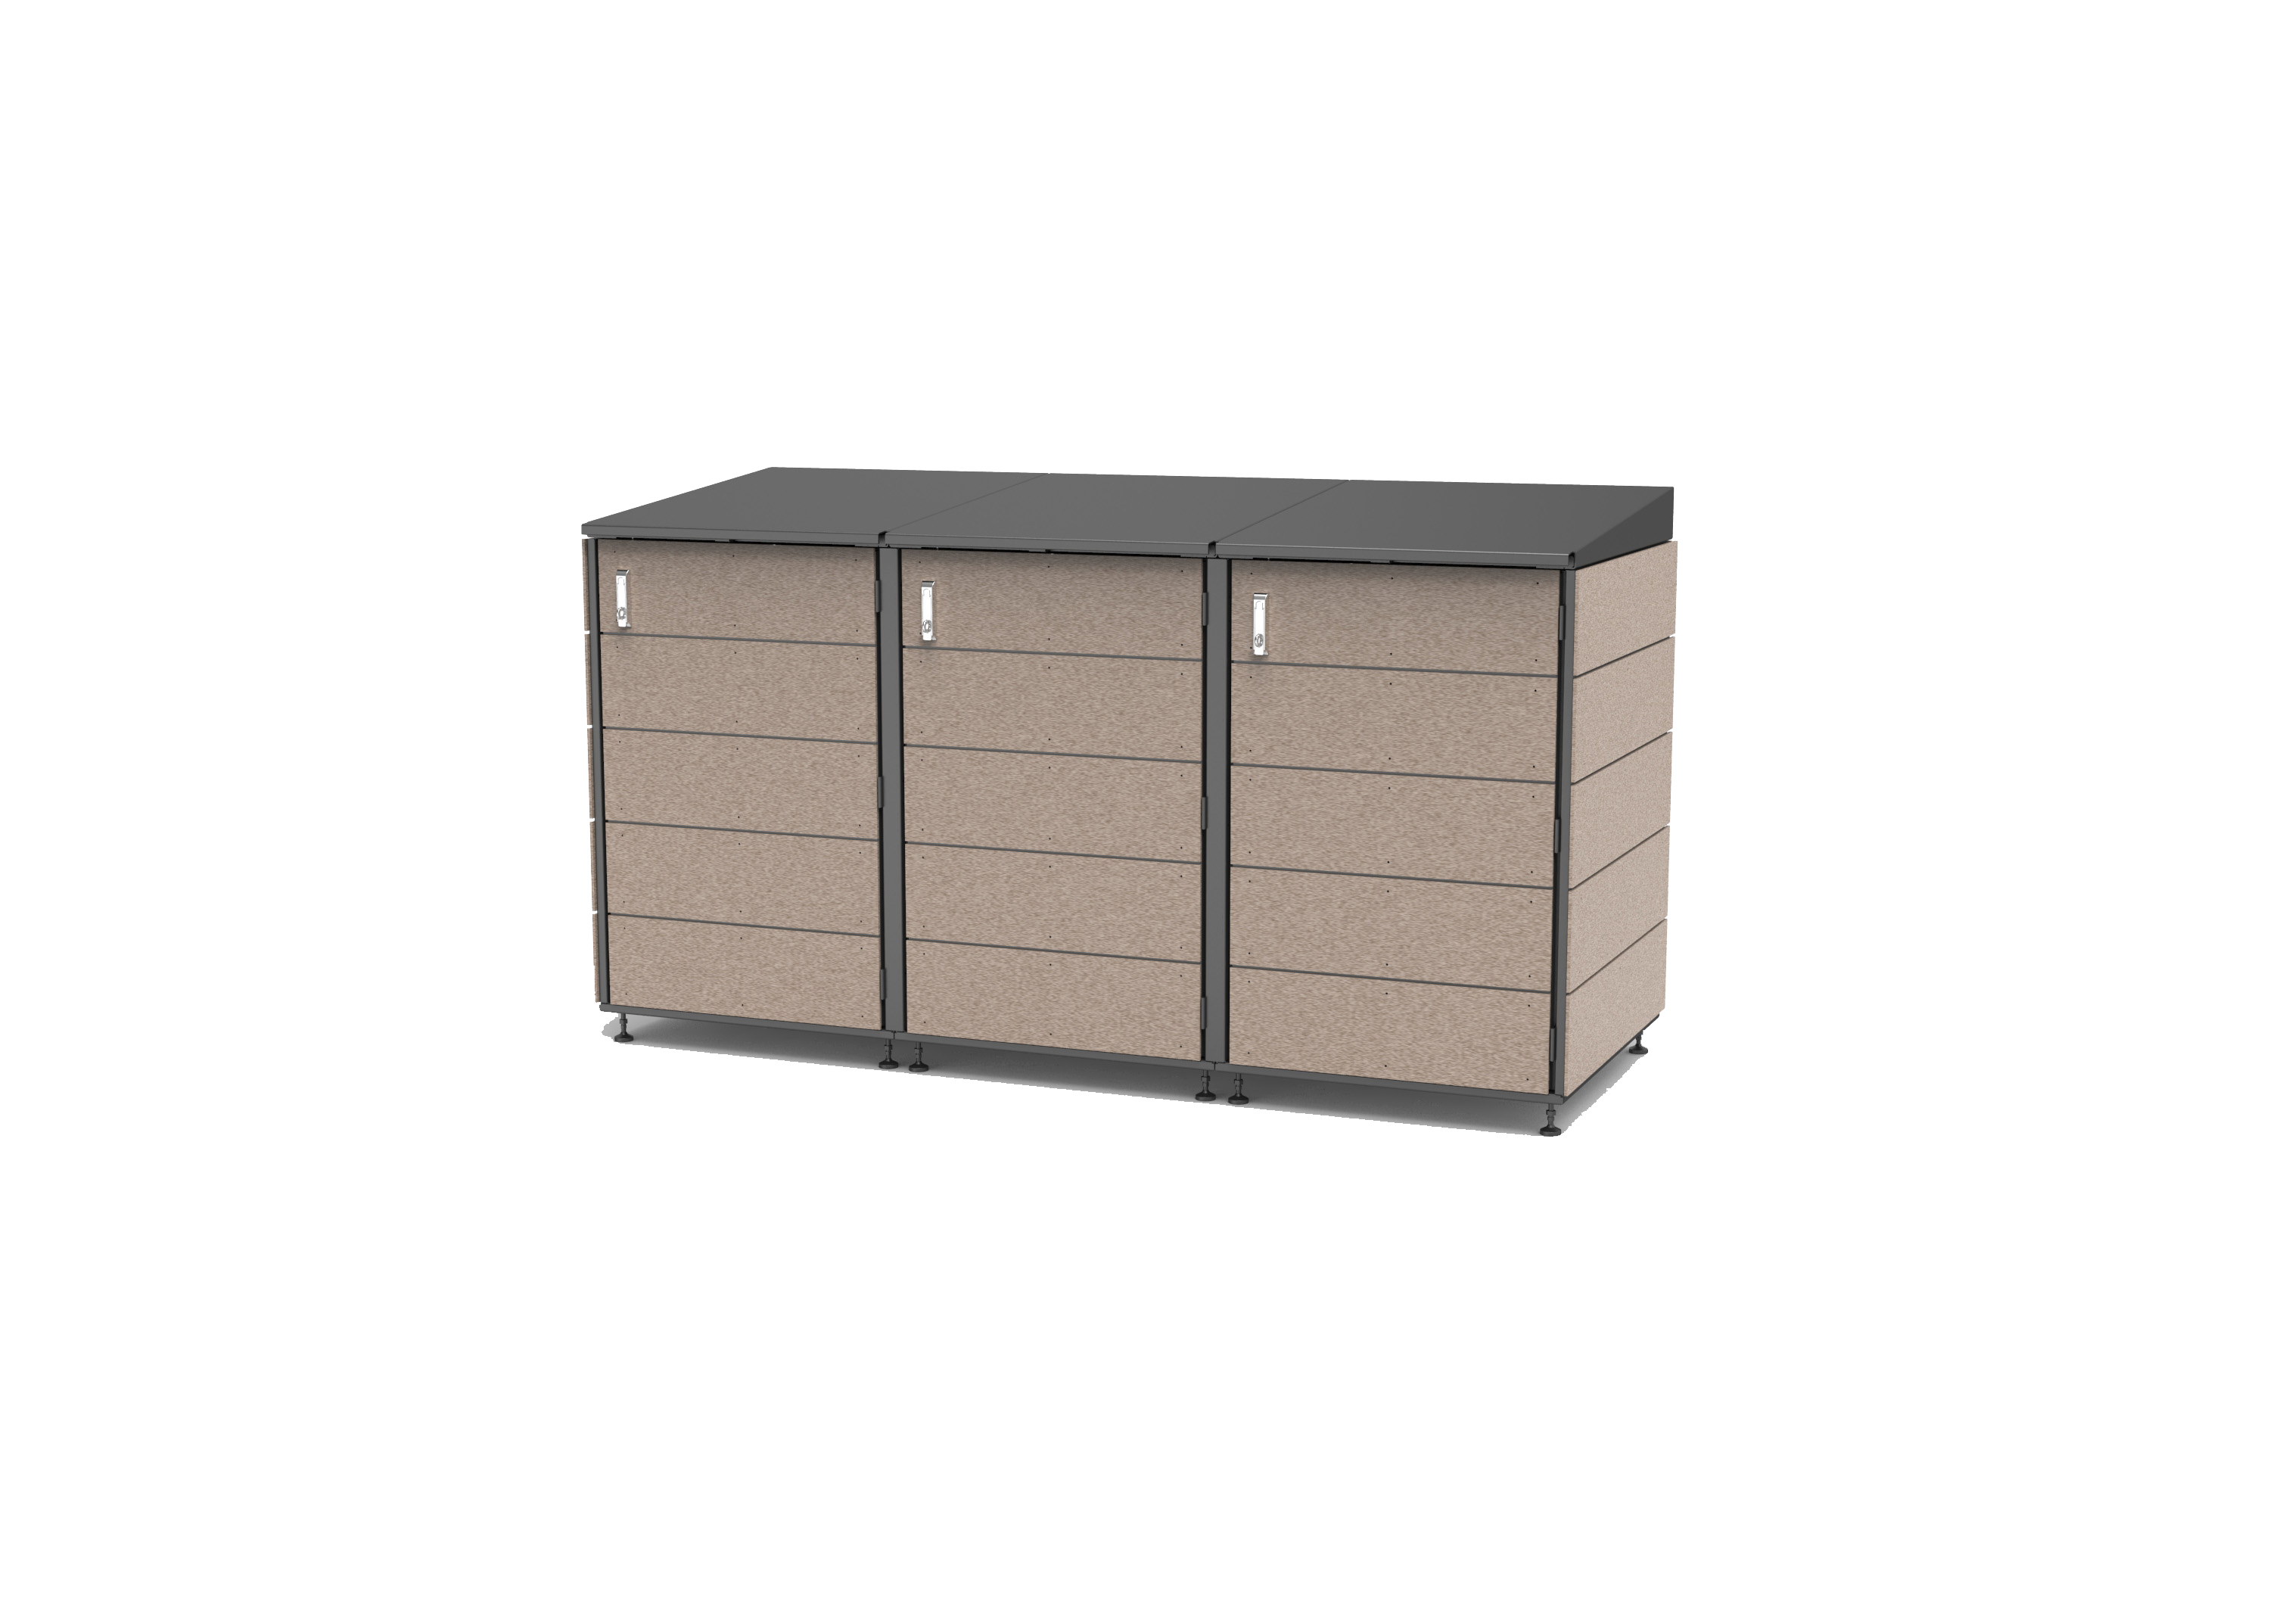 Rubbermaid Weather Resistant Resin Outdoor Patio Storage Cabinet, Oak (2  Pack)